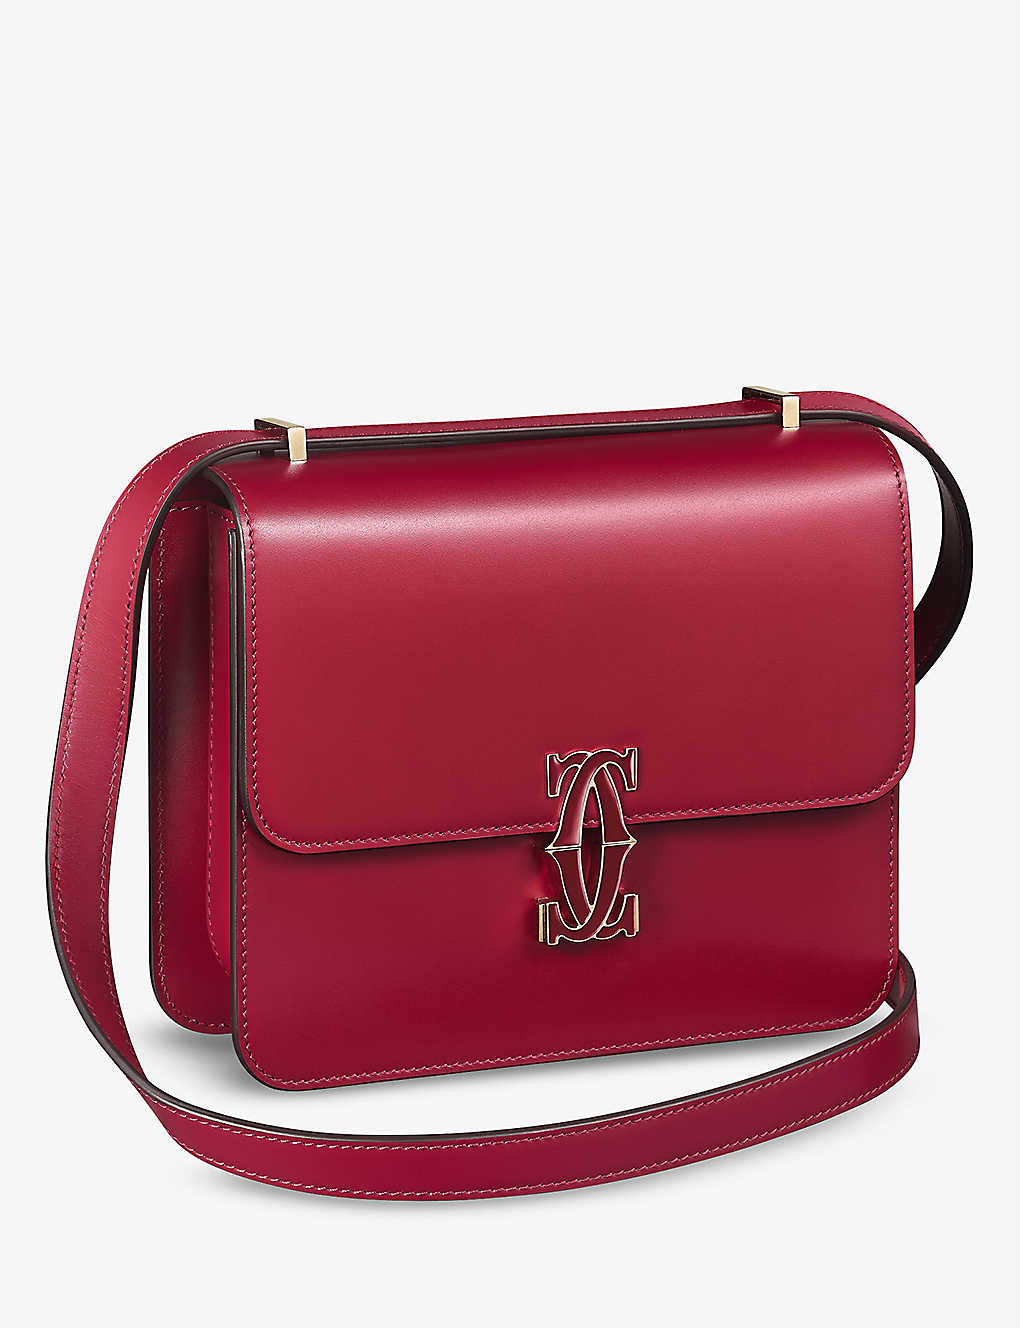 Cartier Womens Cherry Red Double C De Mini Leather Cross-body Bag